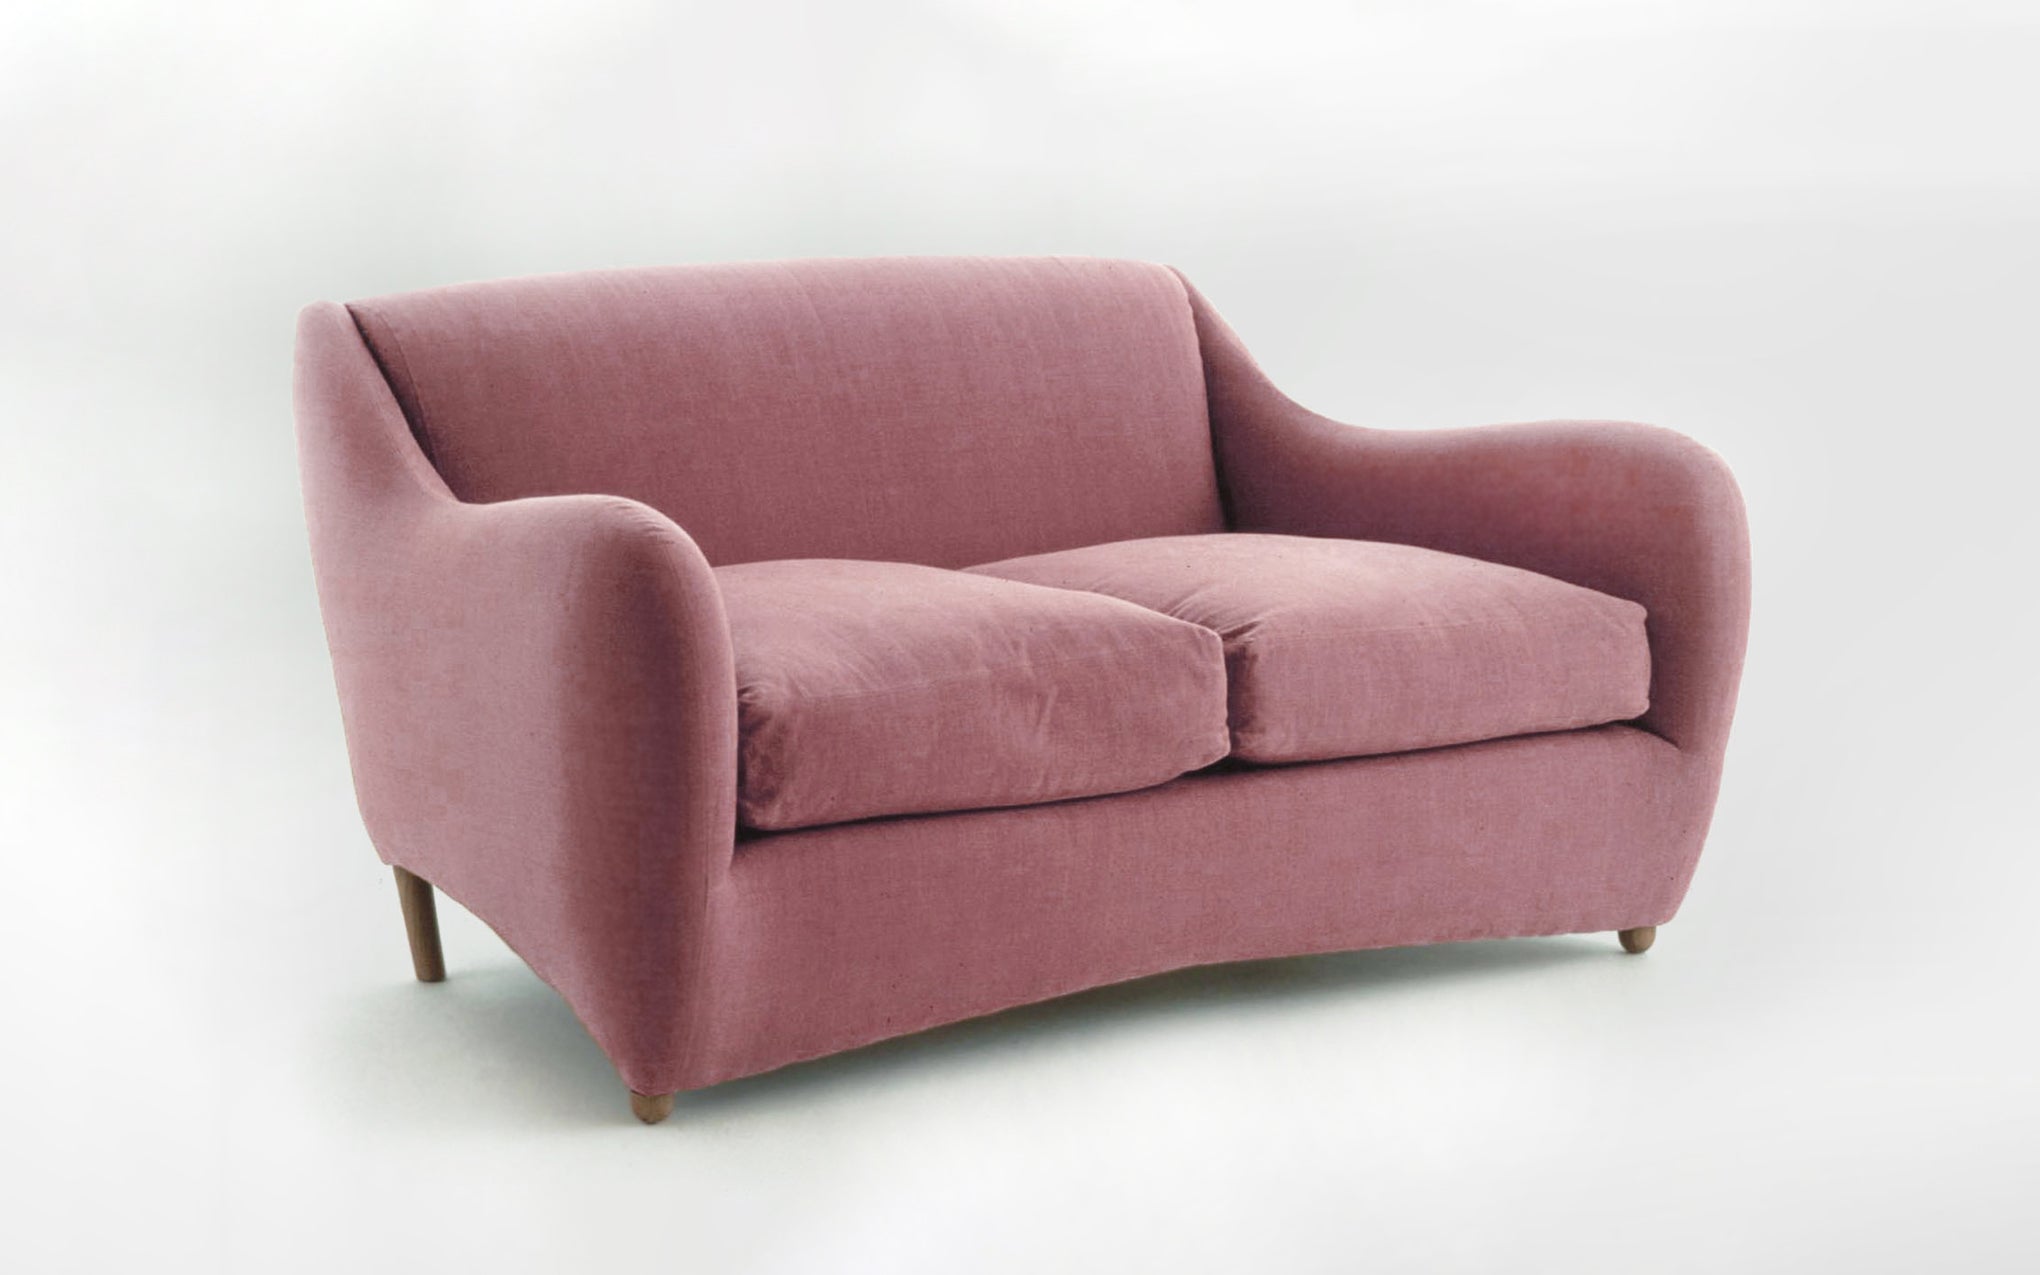 Balzac two seat sofa by Matthew Hilton for SCP